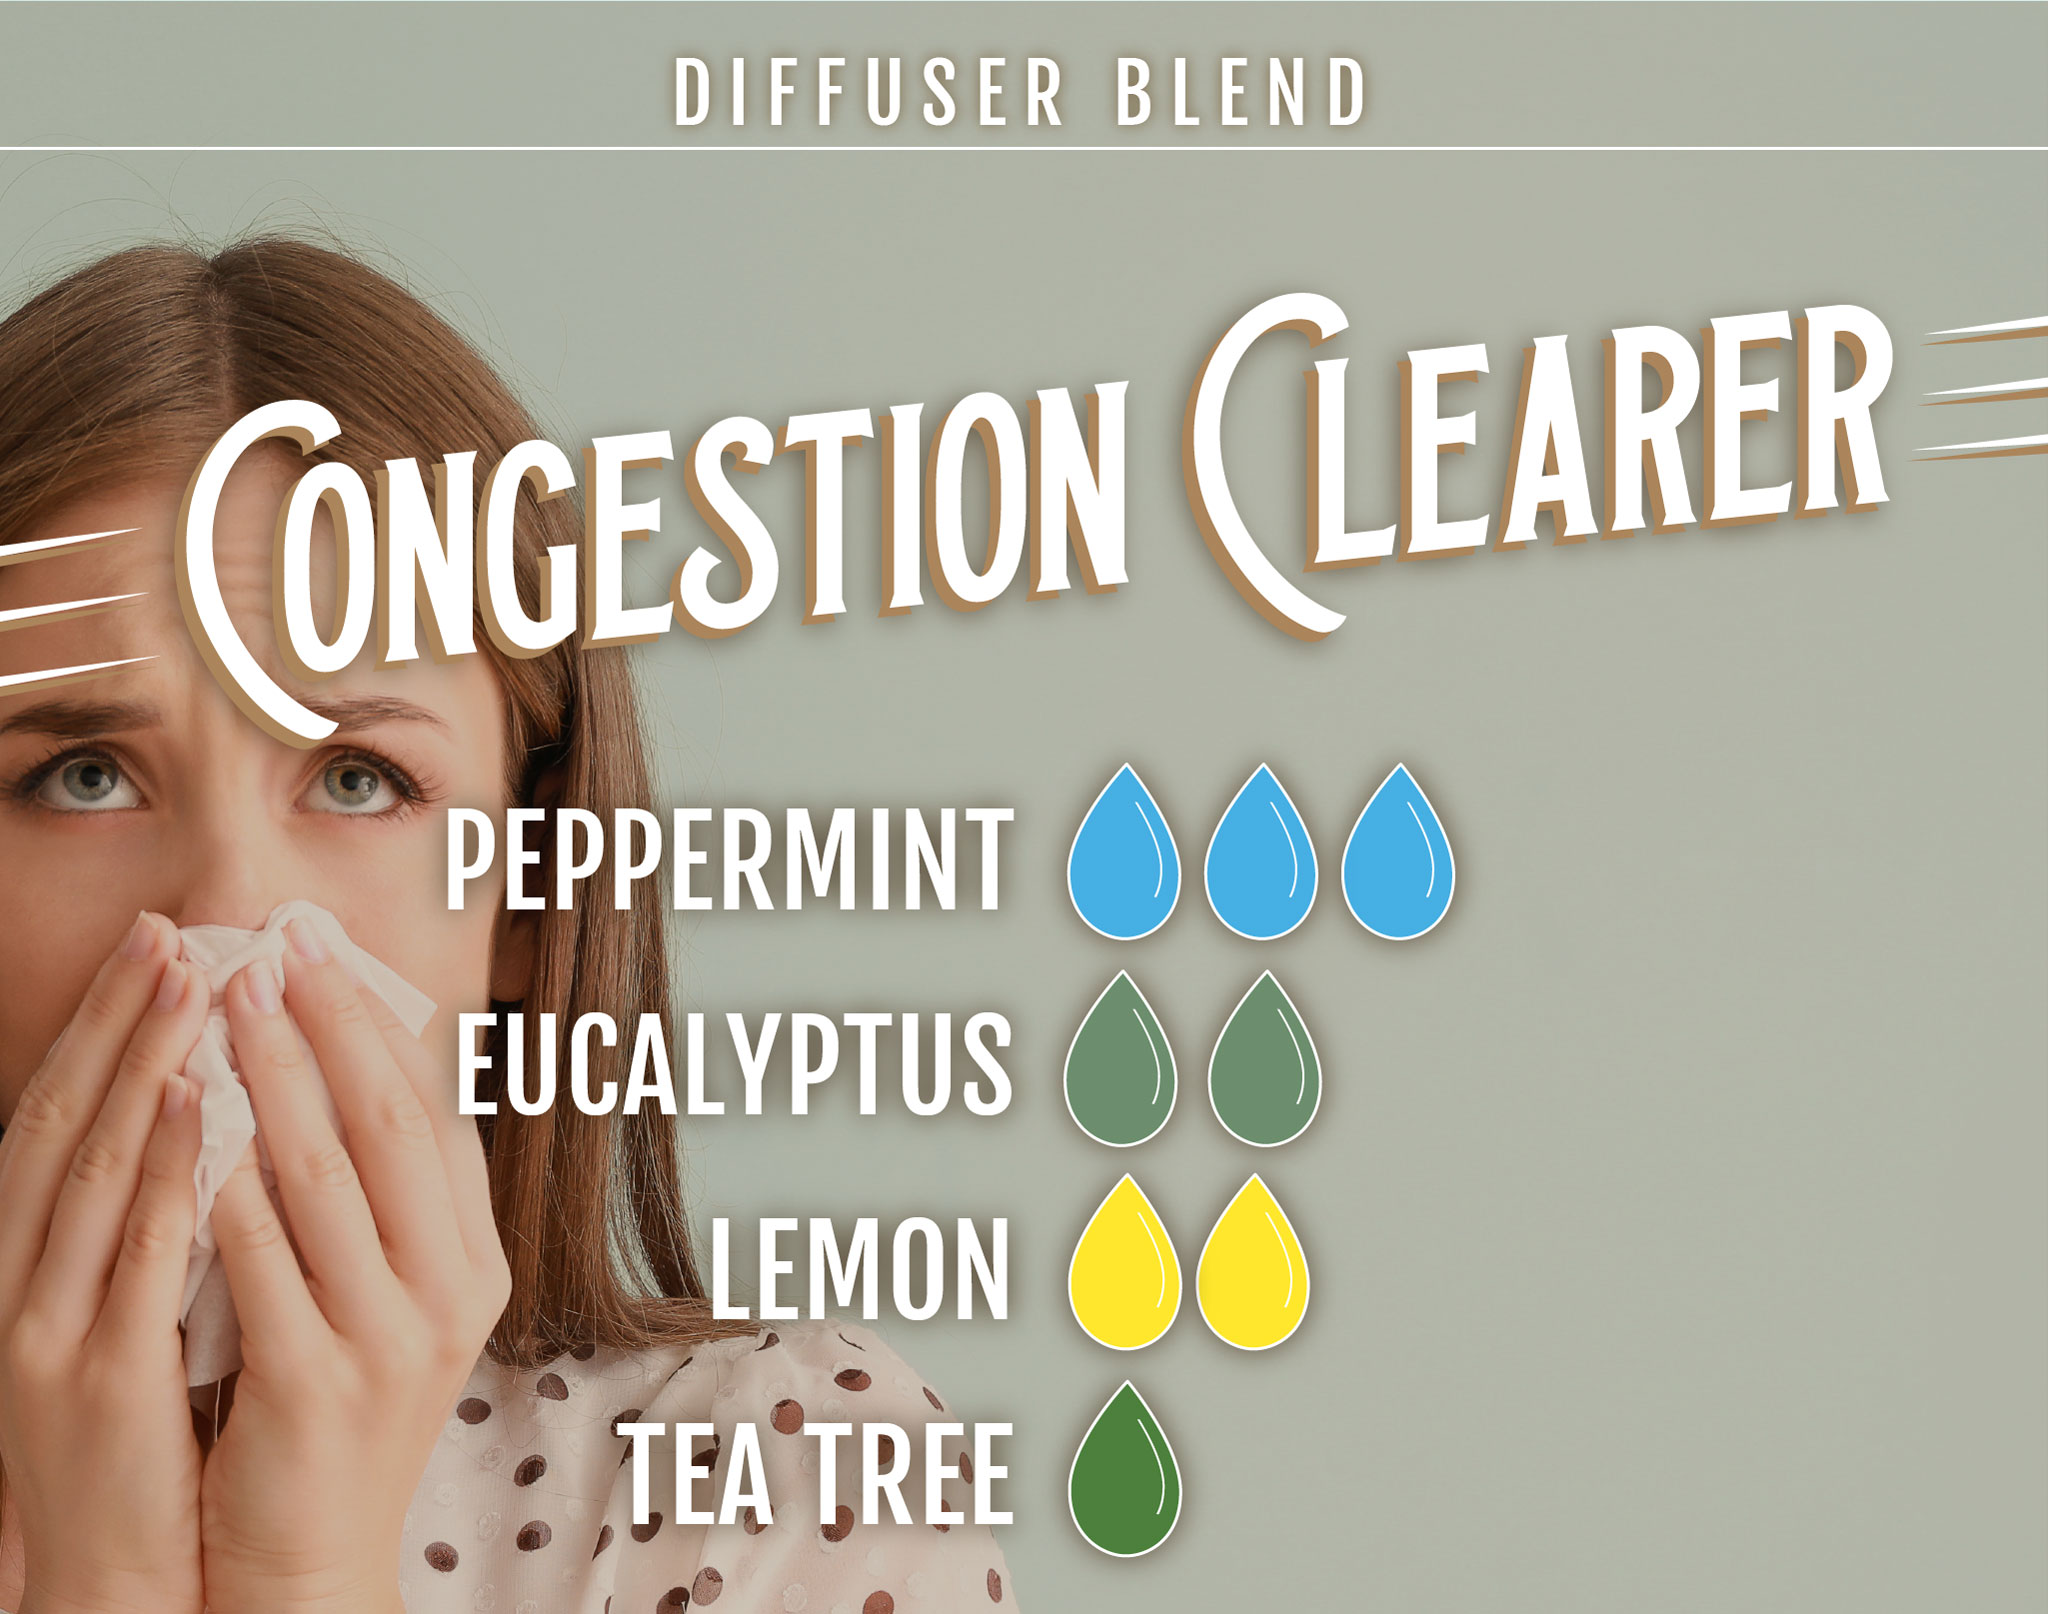 Congestion Clearer Essential Oil (EO) Diffuser Blend: 3 drops peppermint EO, 2 drops eucalyptus EO, 2 drops lemon EO, 1 drop tea tree EO